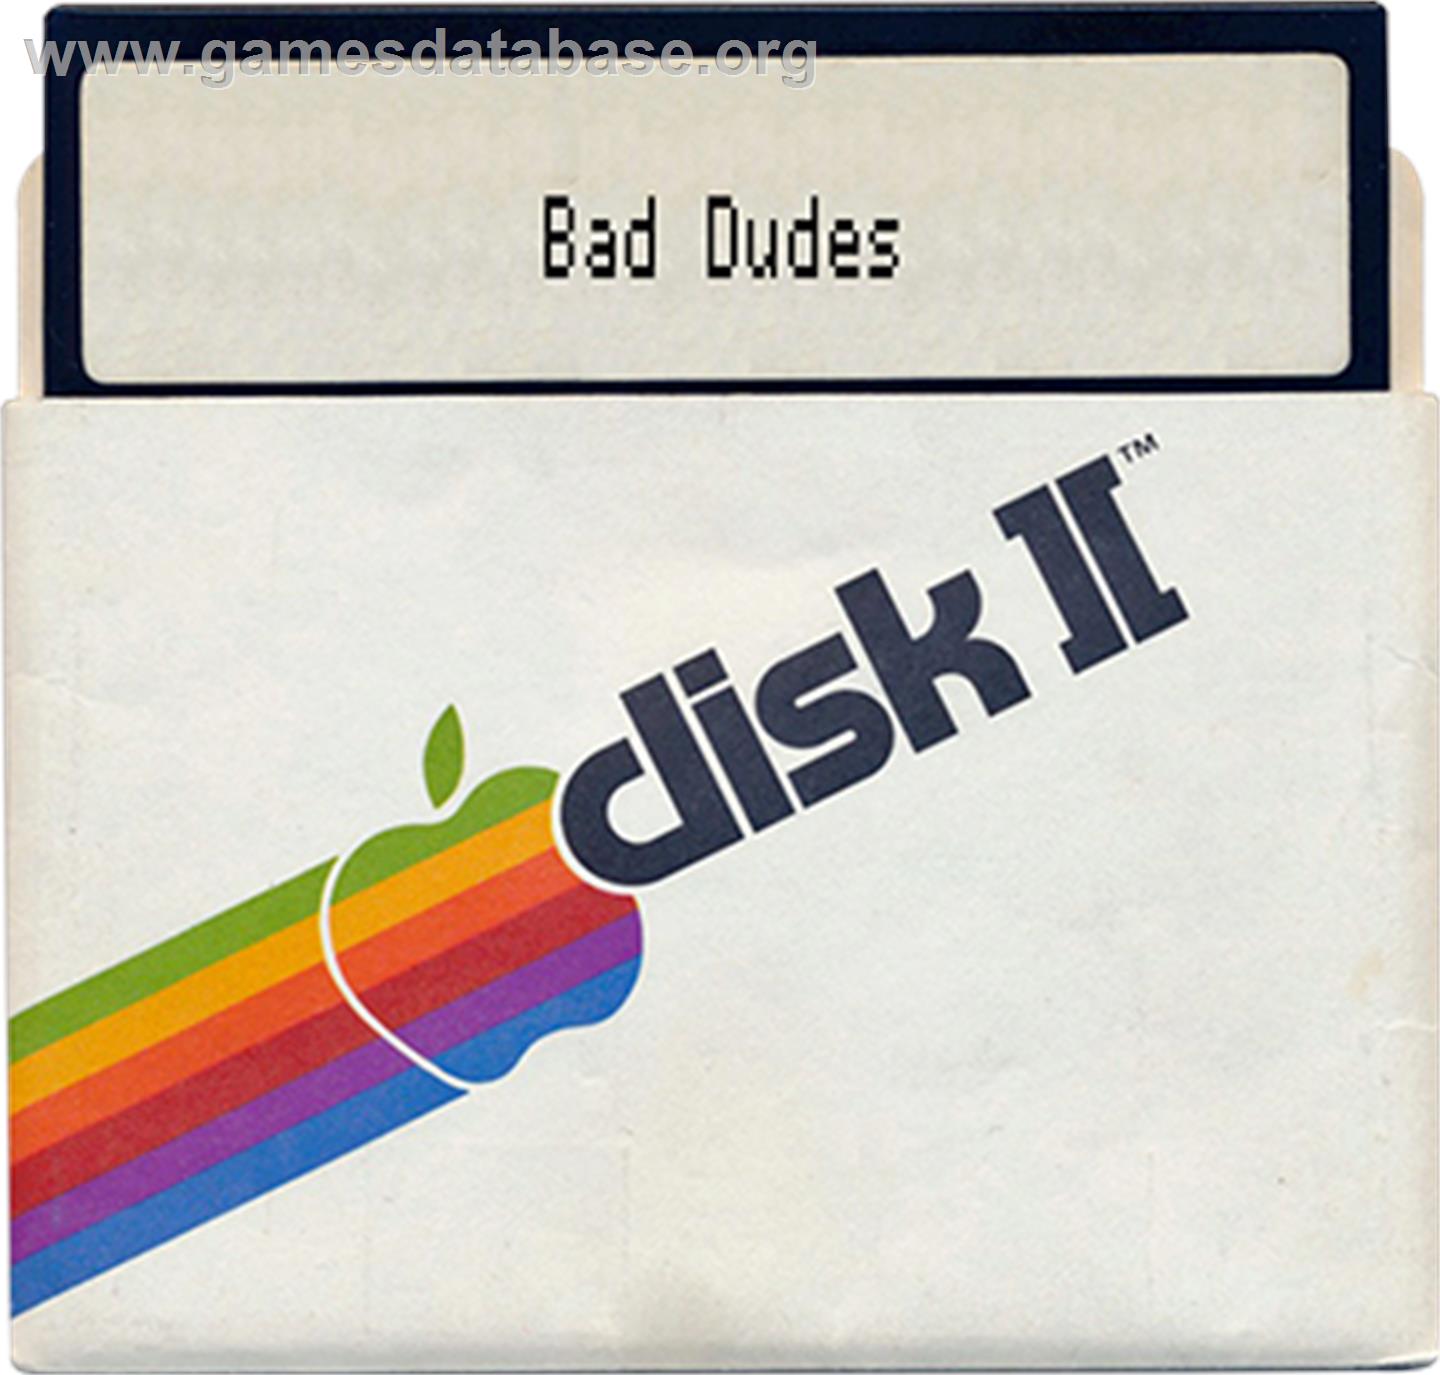 Bad Dudes - Apple II - Artwork - Disc